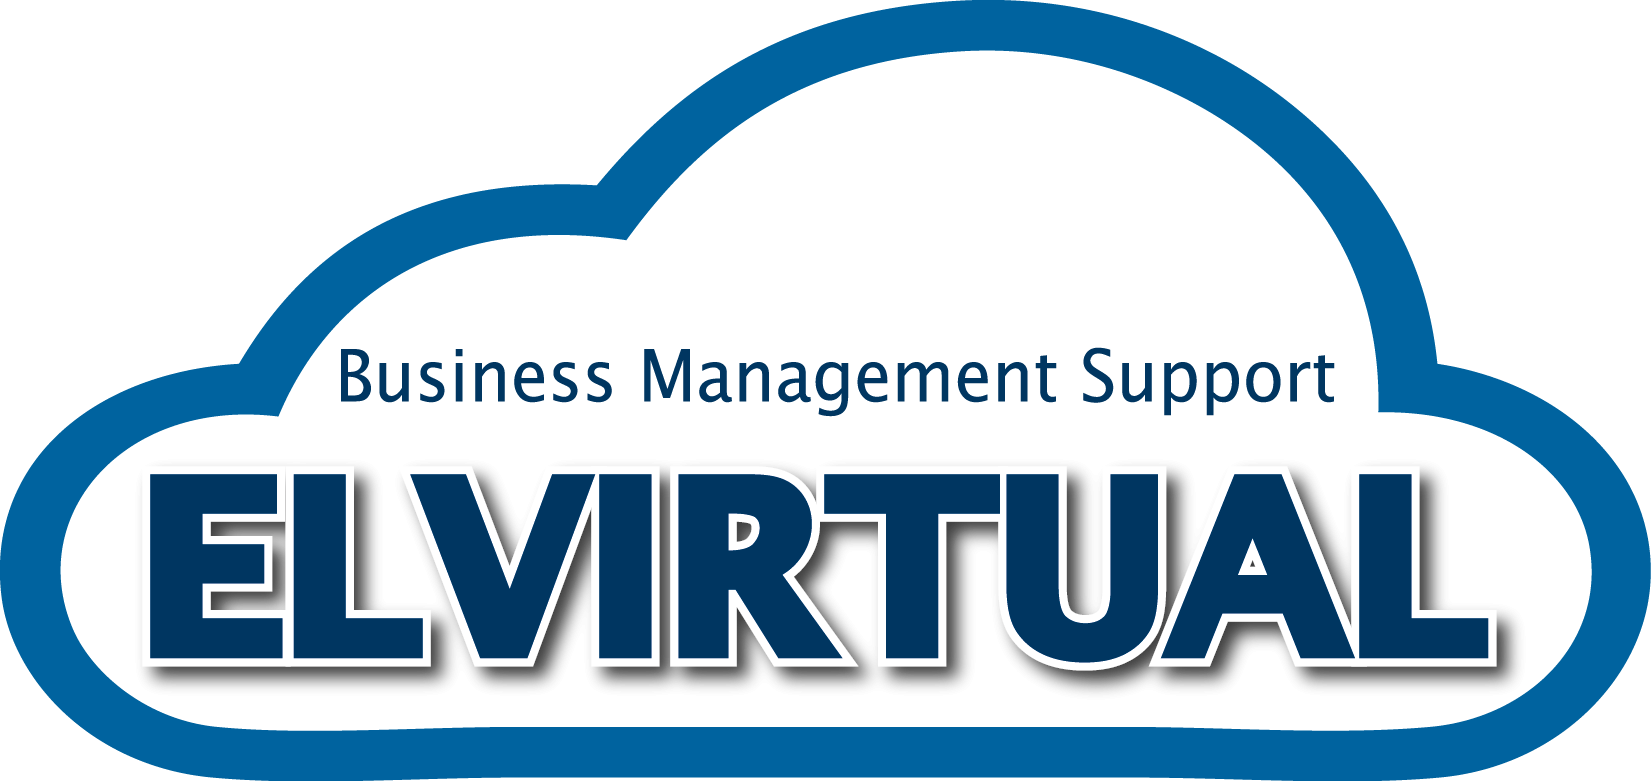 Elvirtual Business Management Support